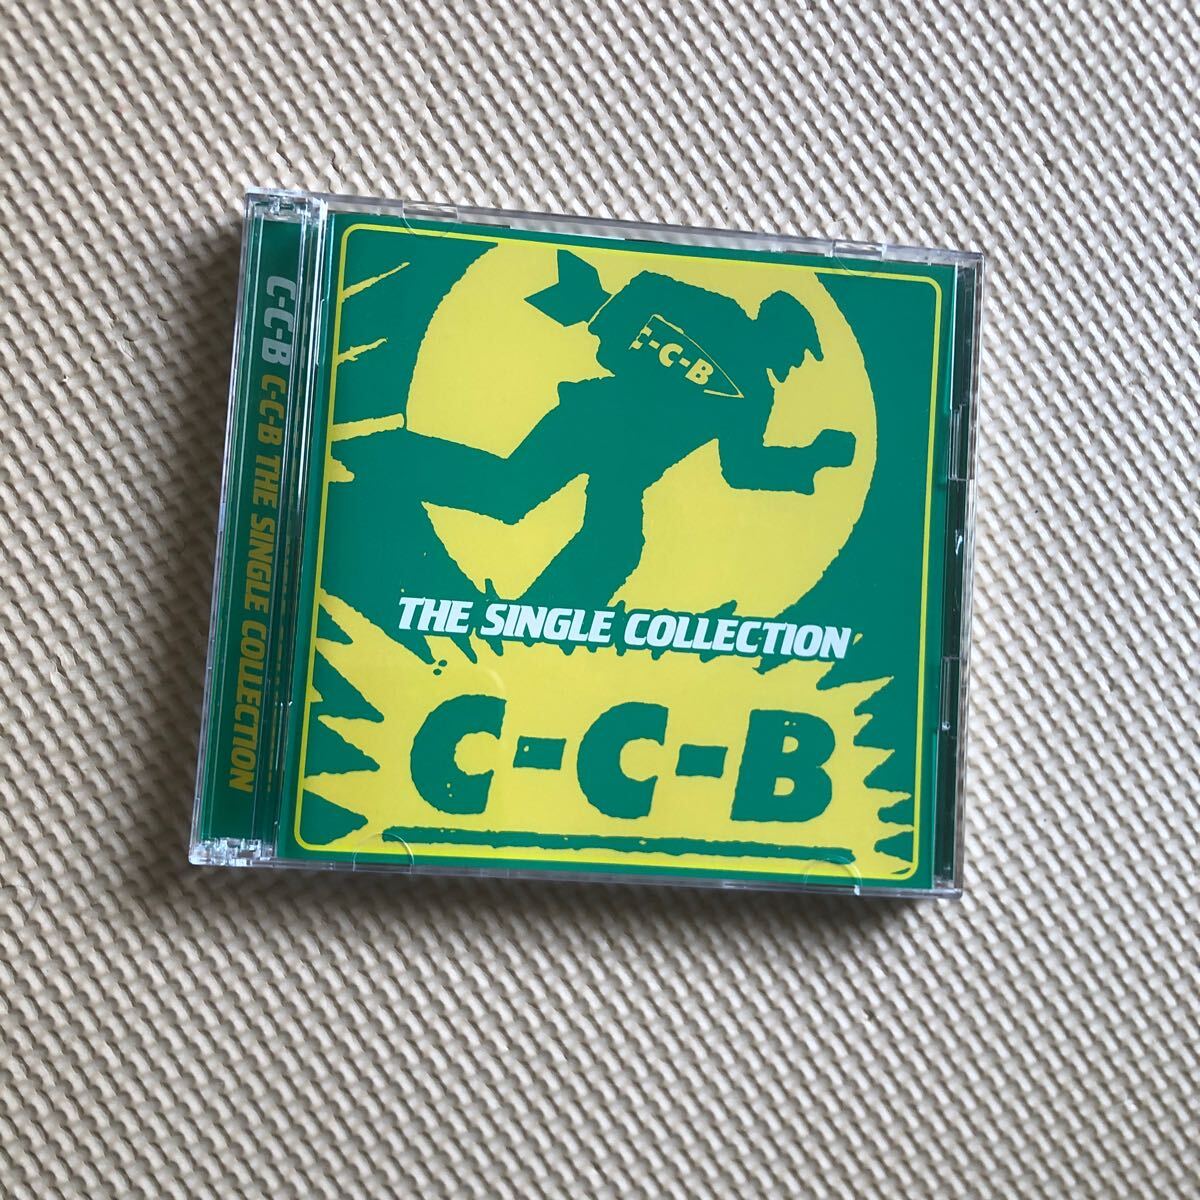 CD C-C-B SINGLE COLLECTION 美品の画像1